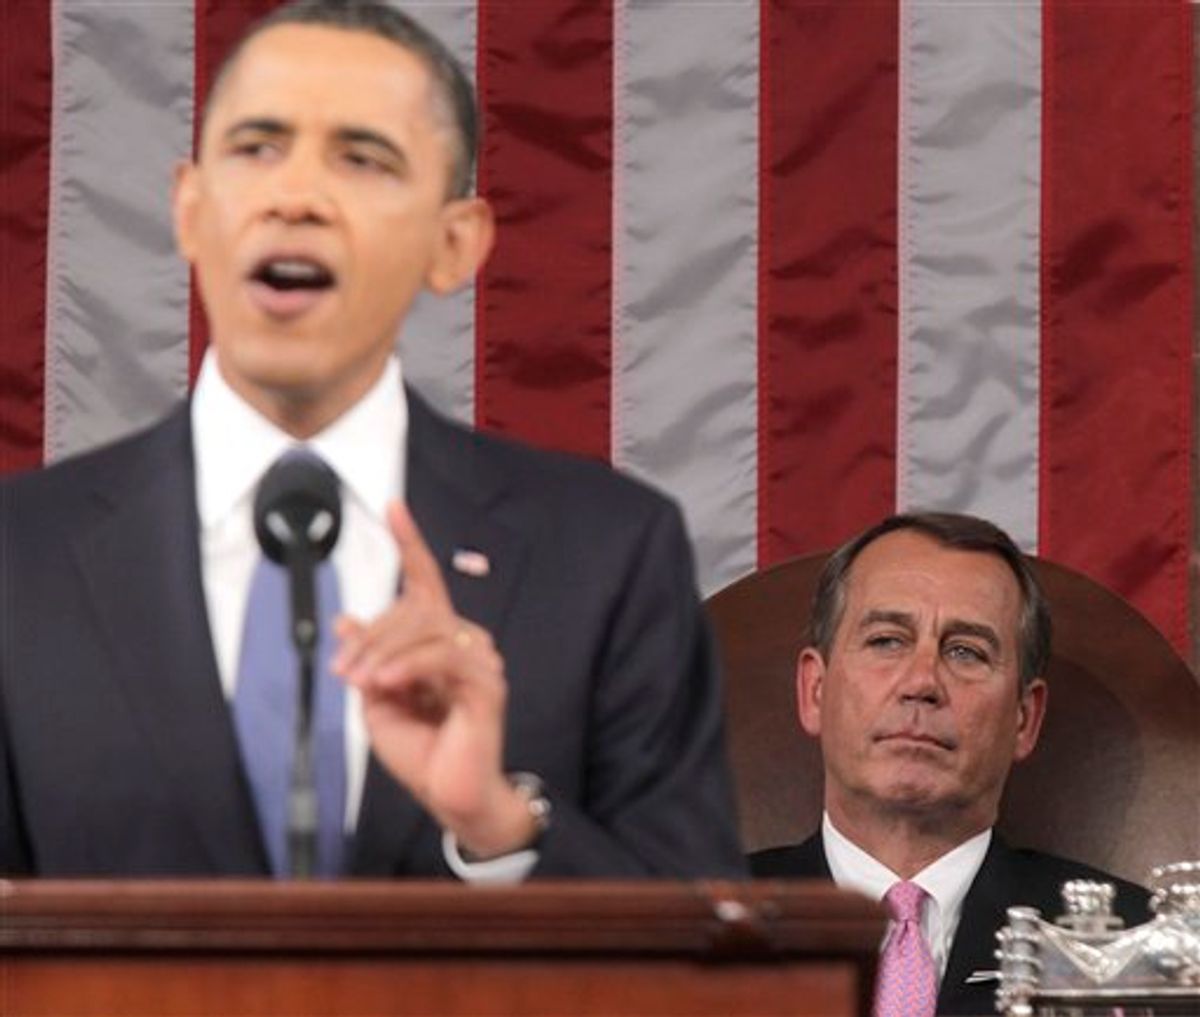 House Speaker John Boehner of Ohio watches as President Barack Obama delivers his State of the Union address on Capitol Hill in Washington, Tuesday, Jan. 25, 2011.  (AP Photo/Pablo Martinez Monsivais, Pool) (AP)